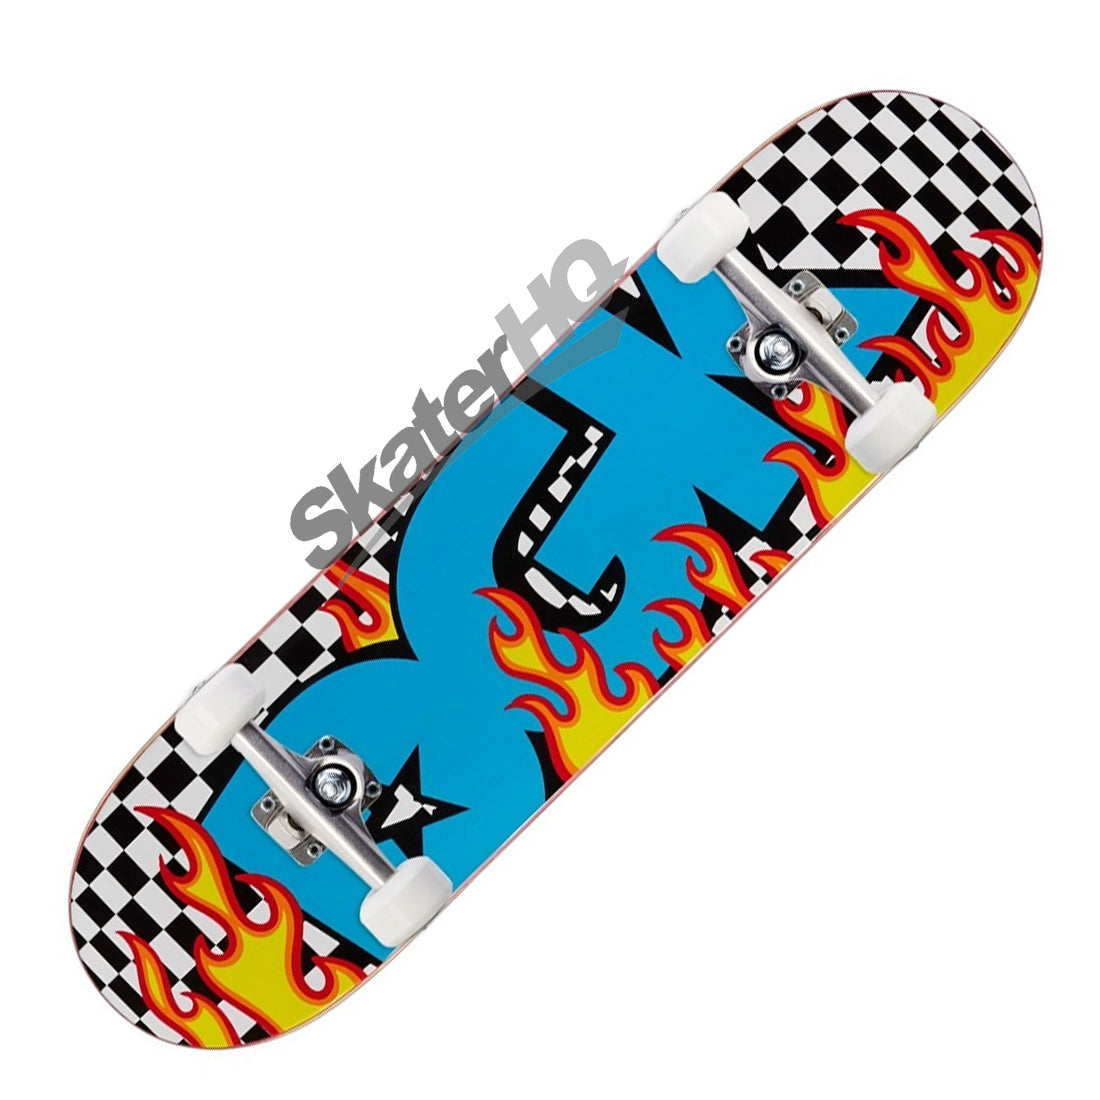 DGK On Fire 7.75 Complete - Checkered Skateboard Completes Modern Street